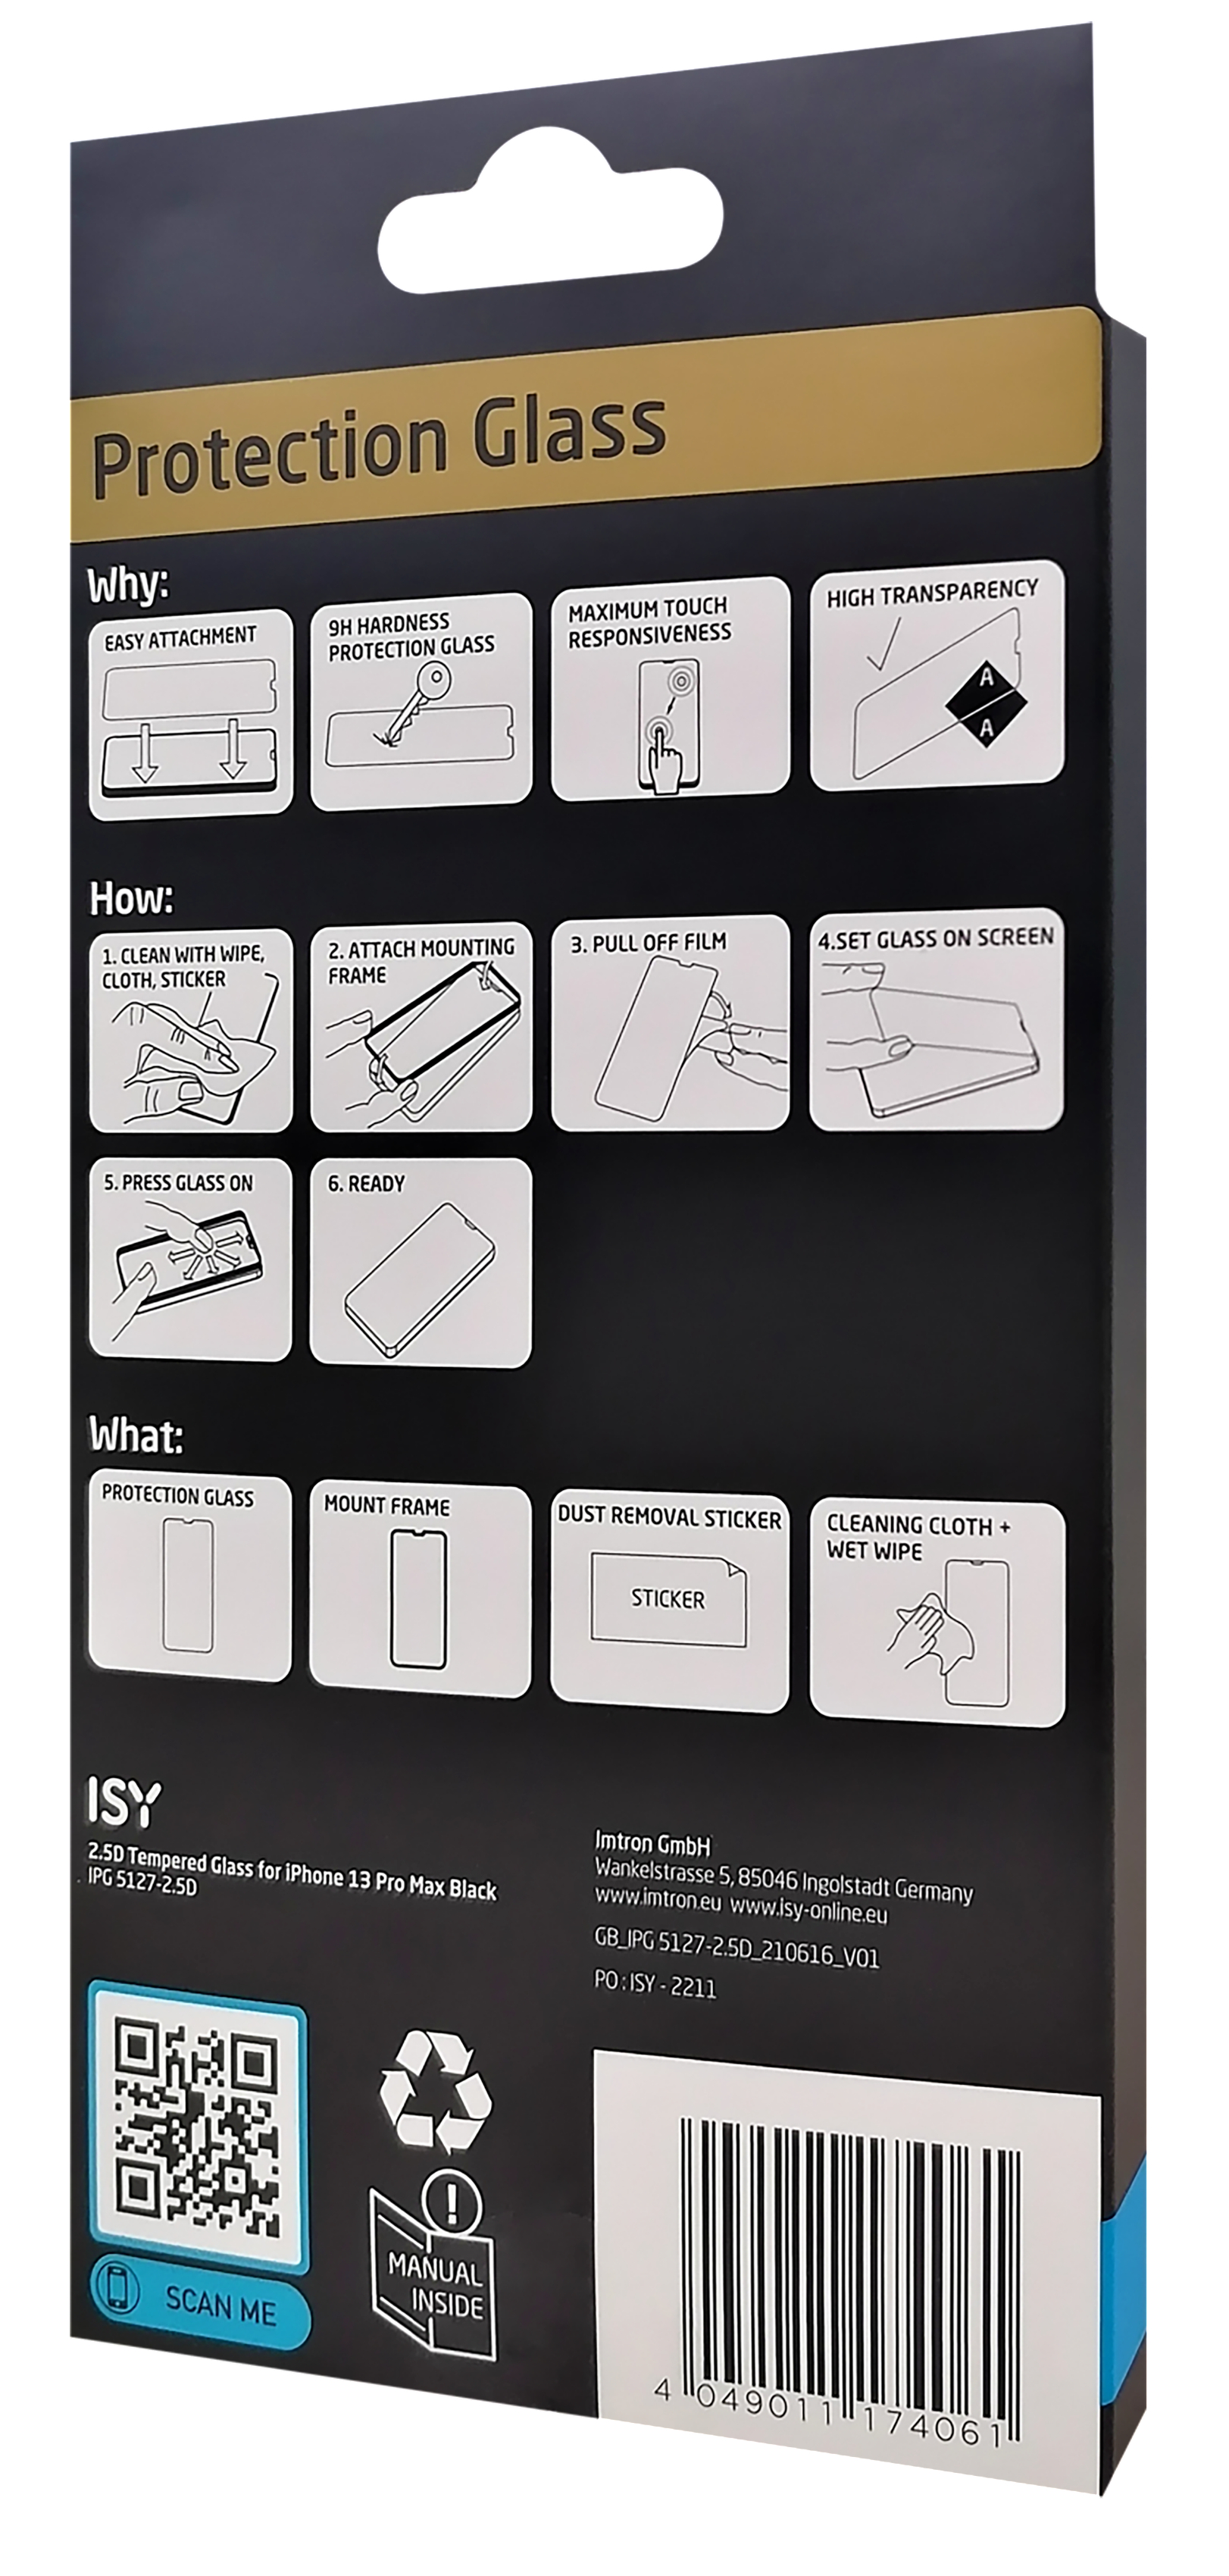 ISY IPG (für 5127-2.5D 13 Pro Max) iPhone Apple Displayschutz